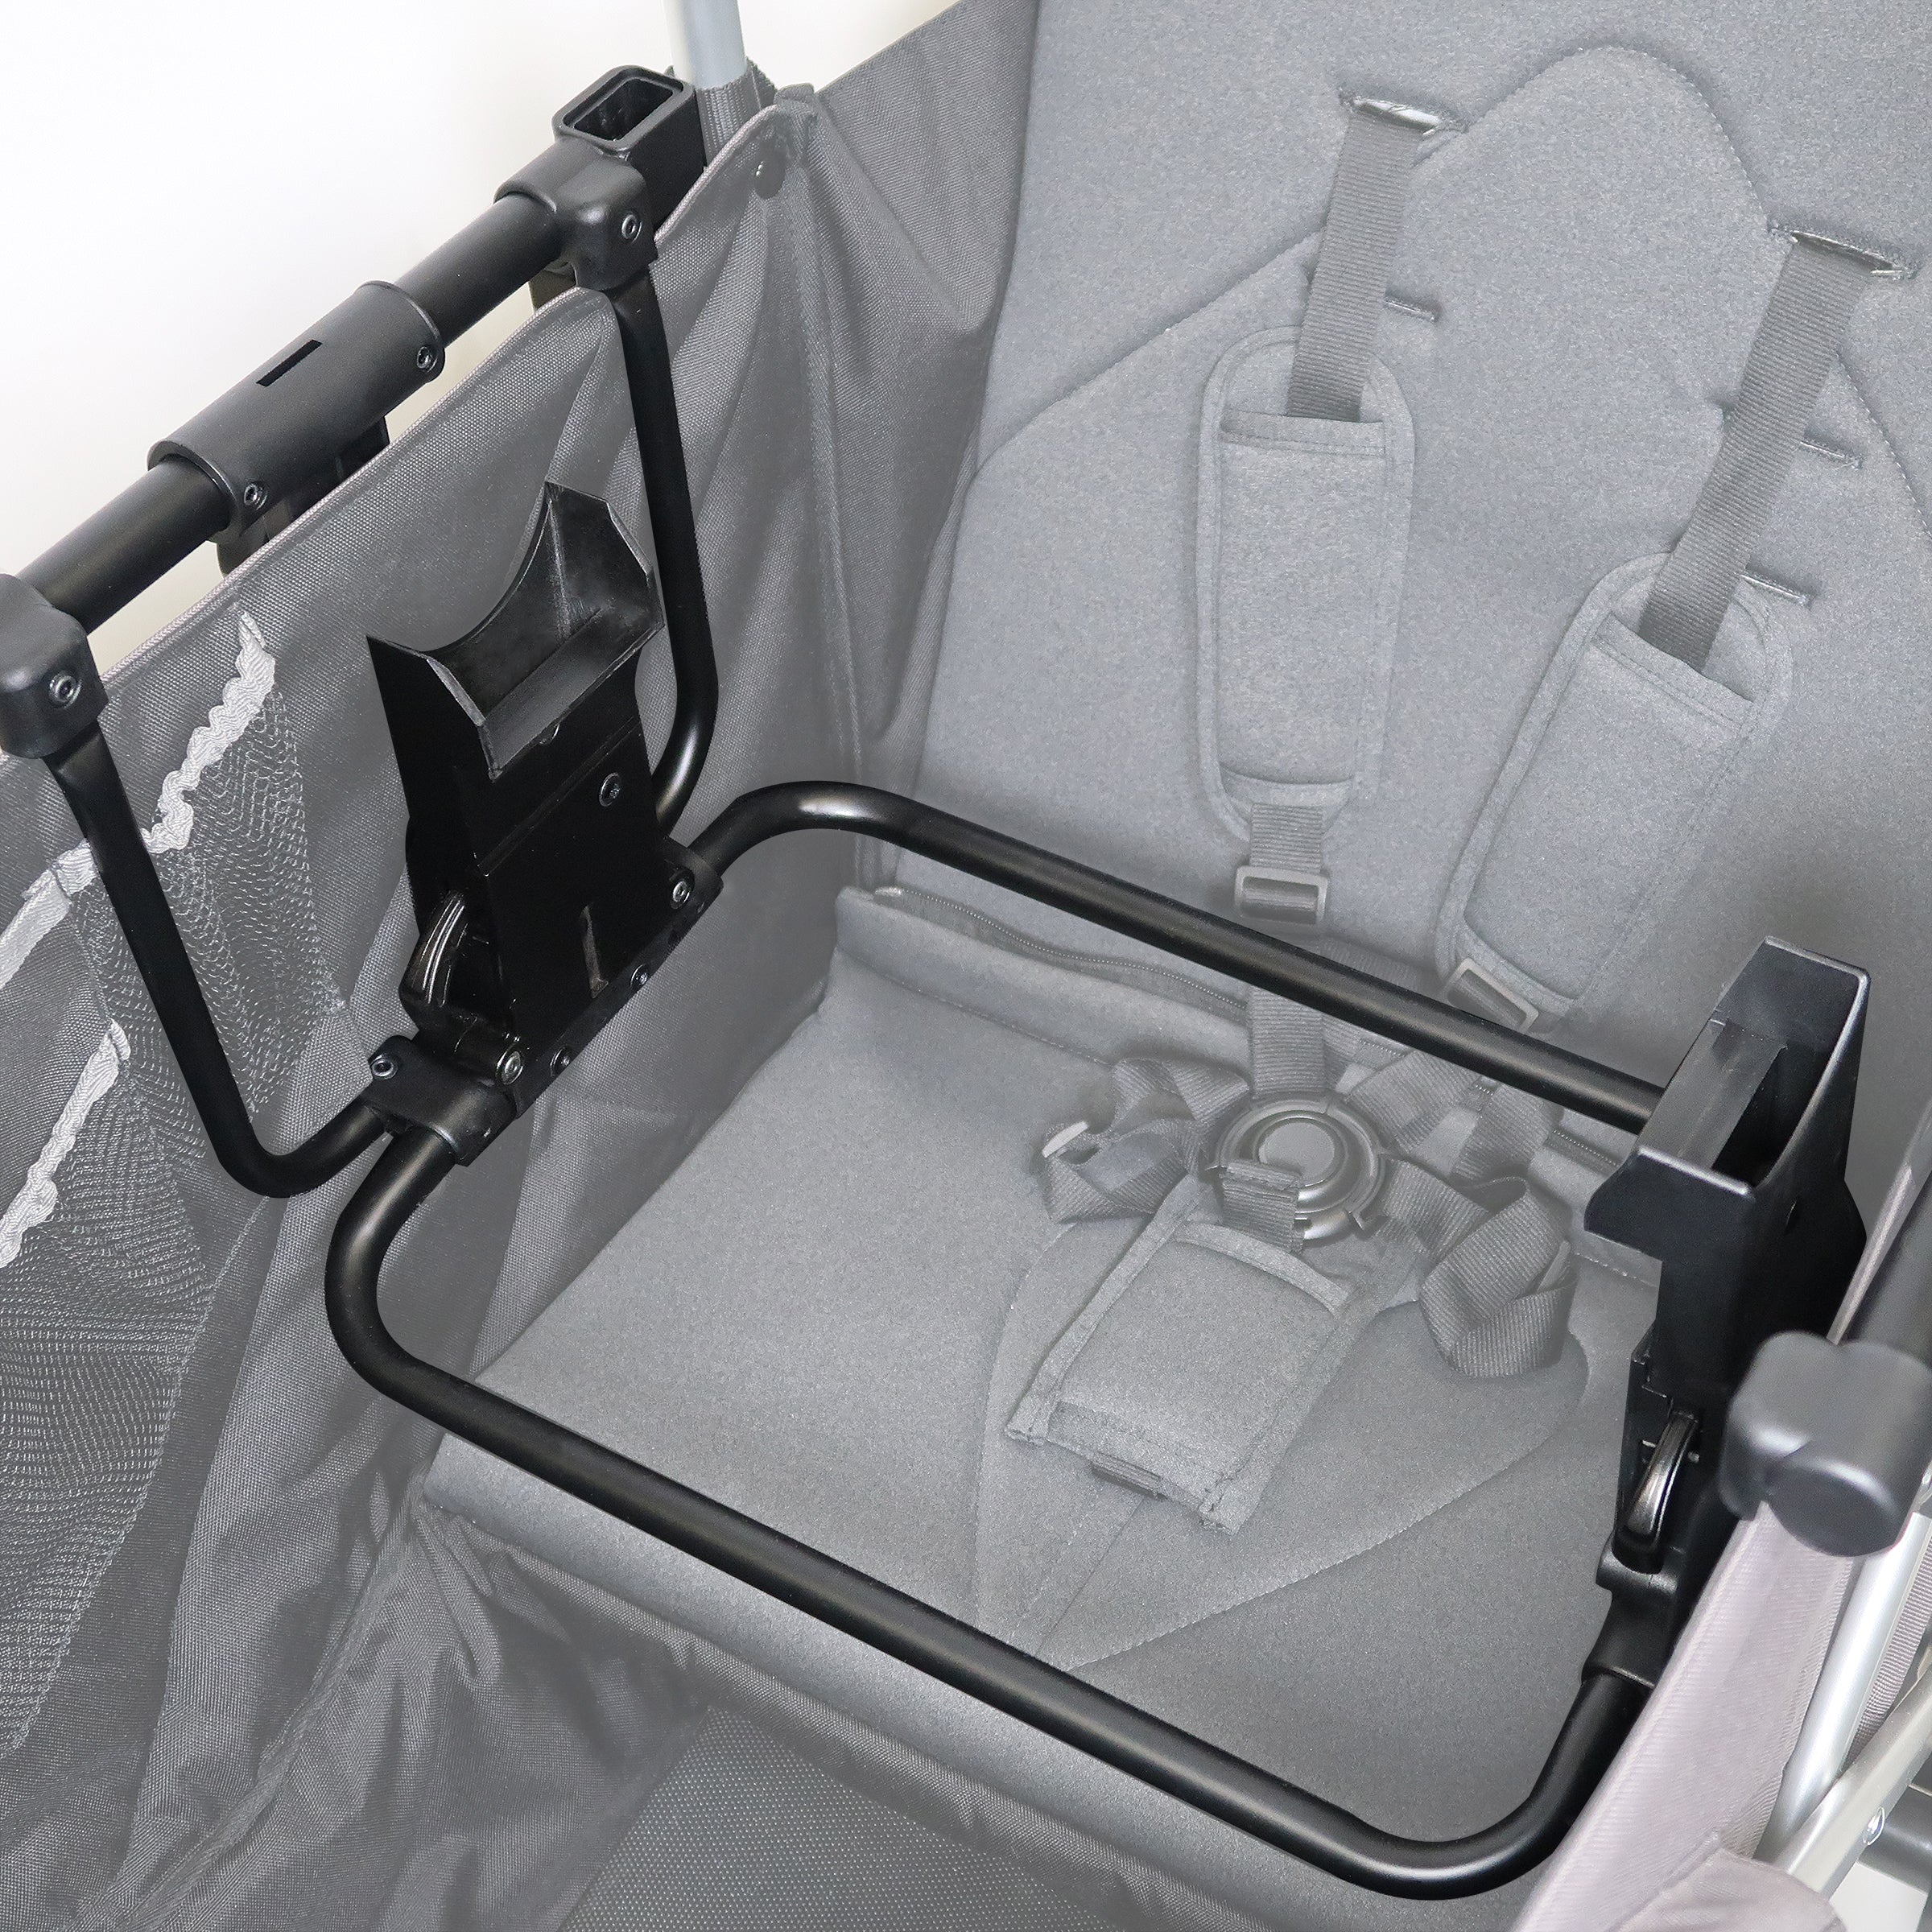 britax car seat adapter on the caravan stroller wagon